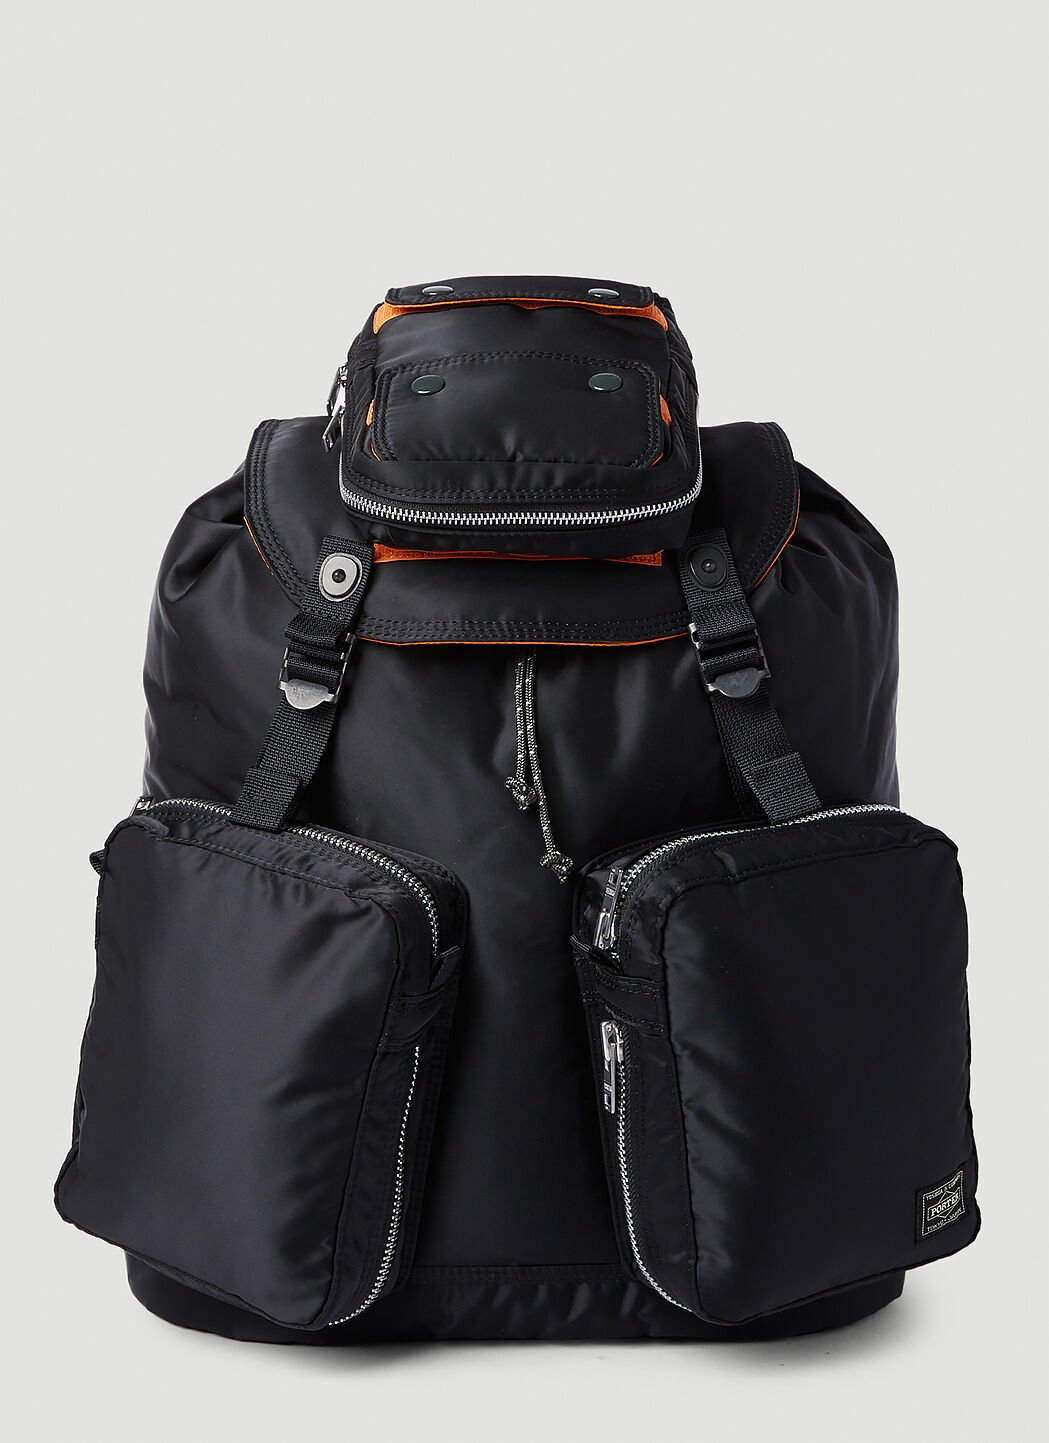 Porter-Yoshida & Co Tanker Backpack in Black | LN-CC®